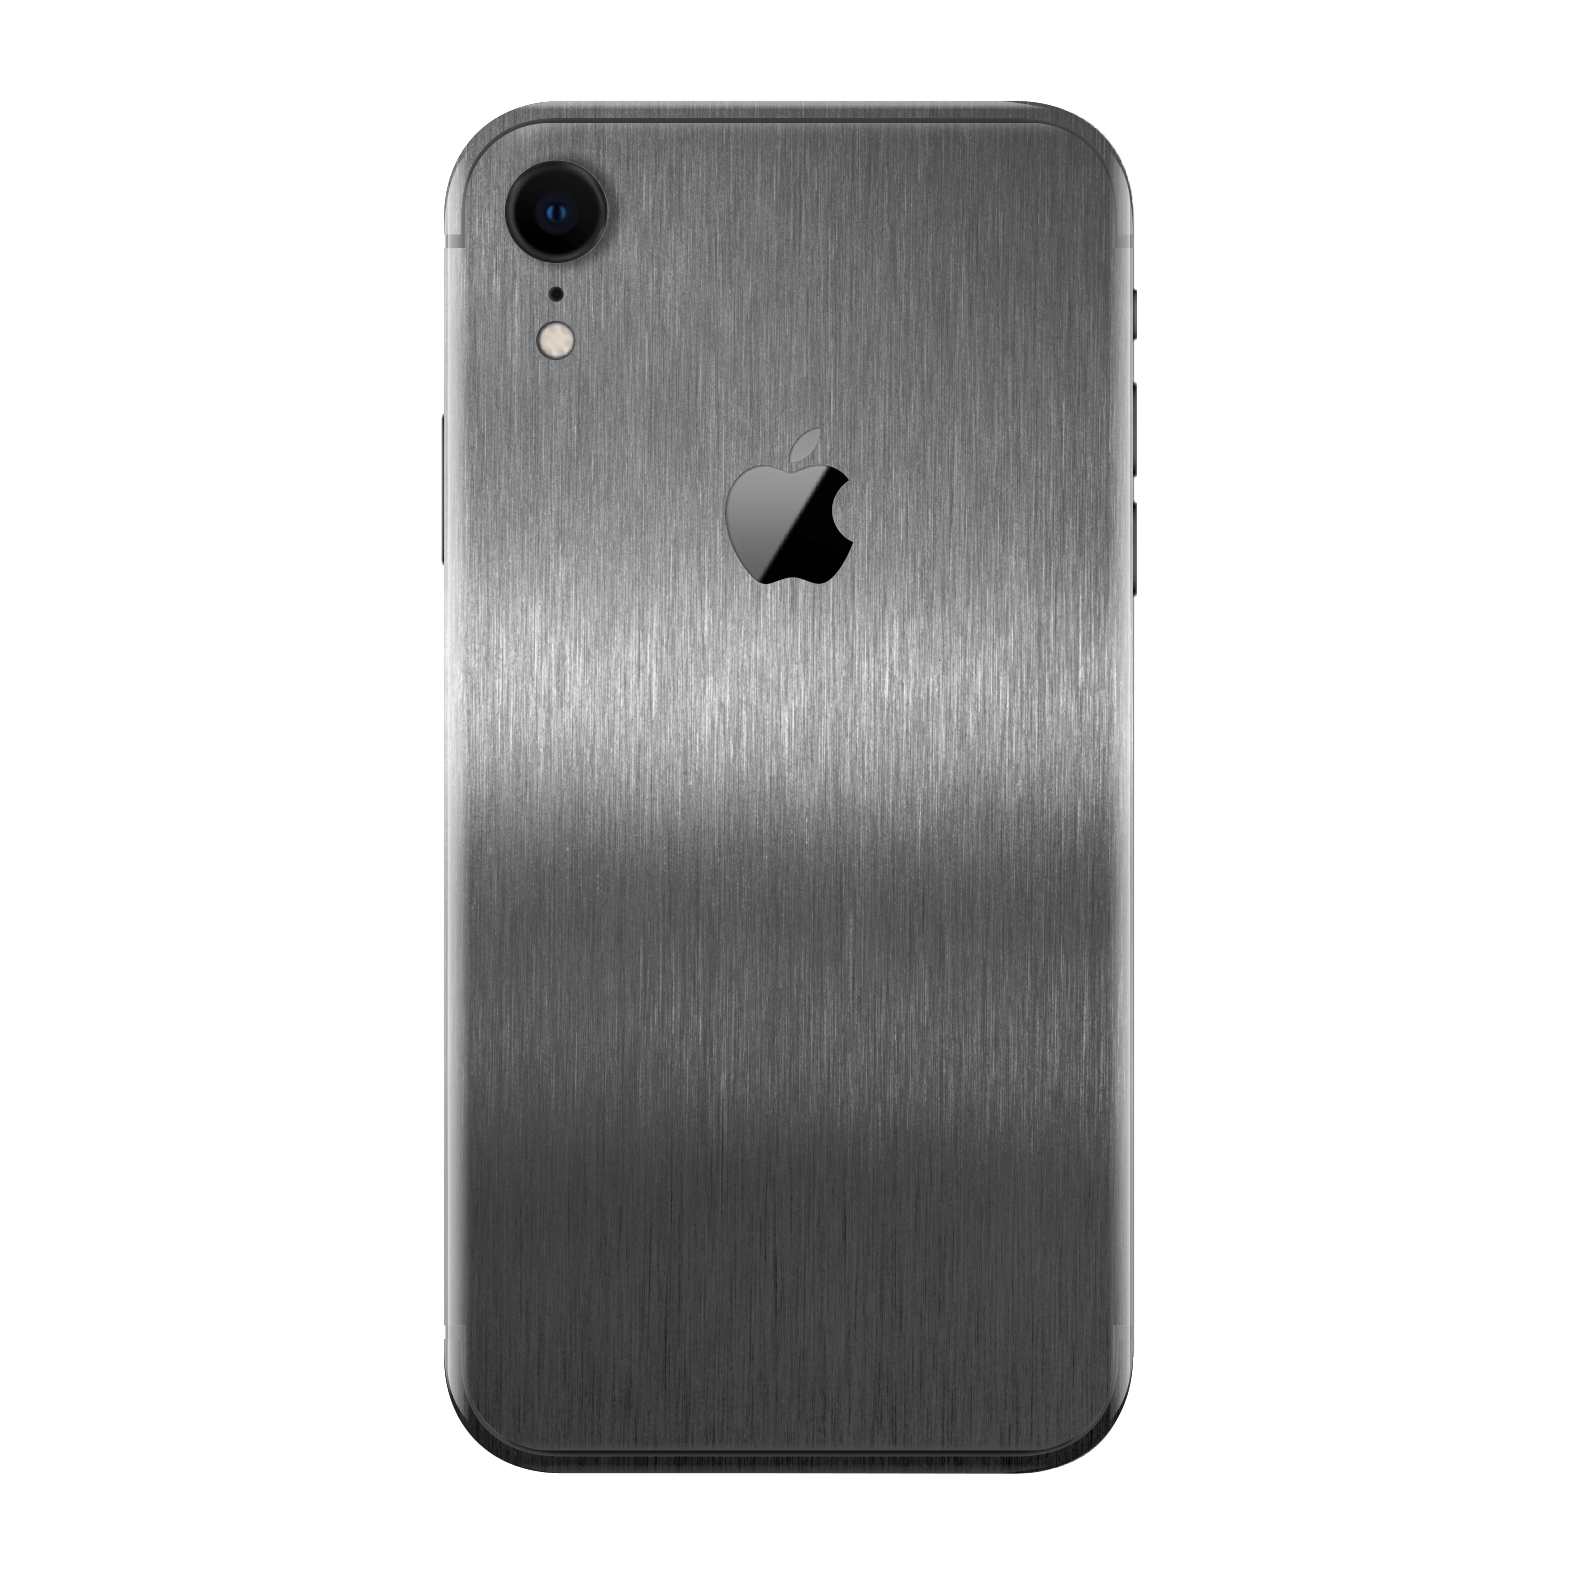 iPhone XR Brushed Metal Titanium Metallic Skin Wrap Sticker Decal Cover Protector by EasySkinz | EasySkinz.com